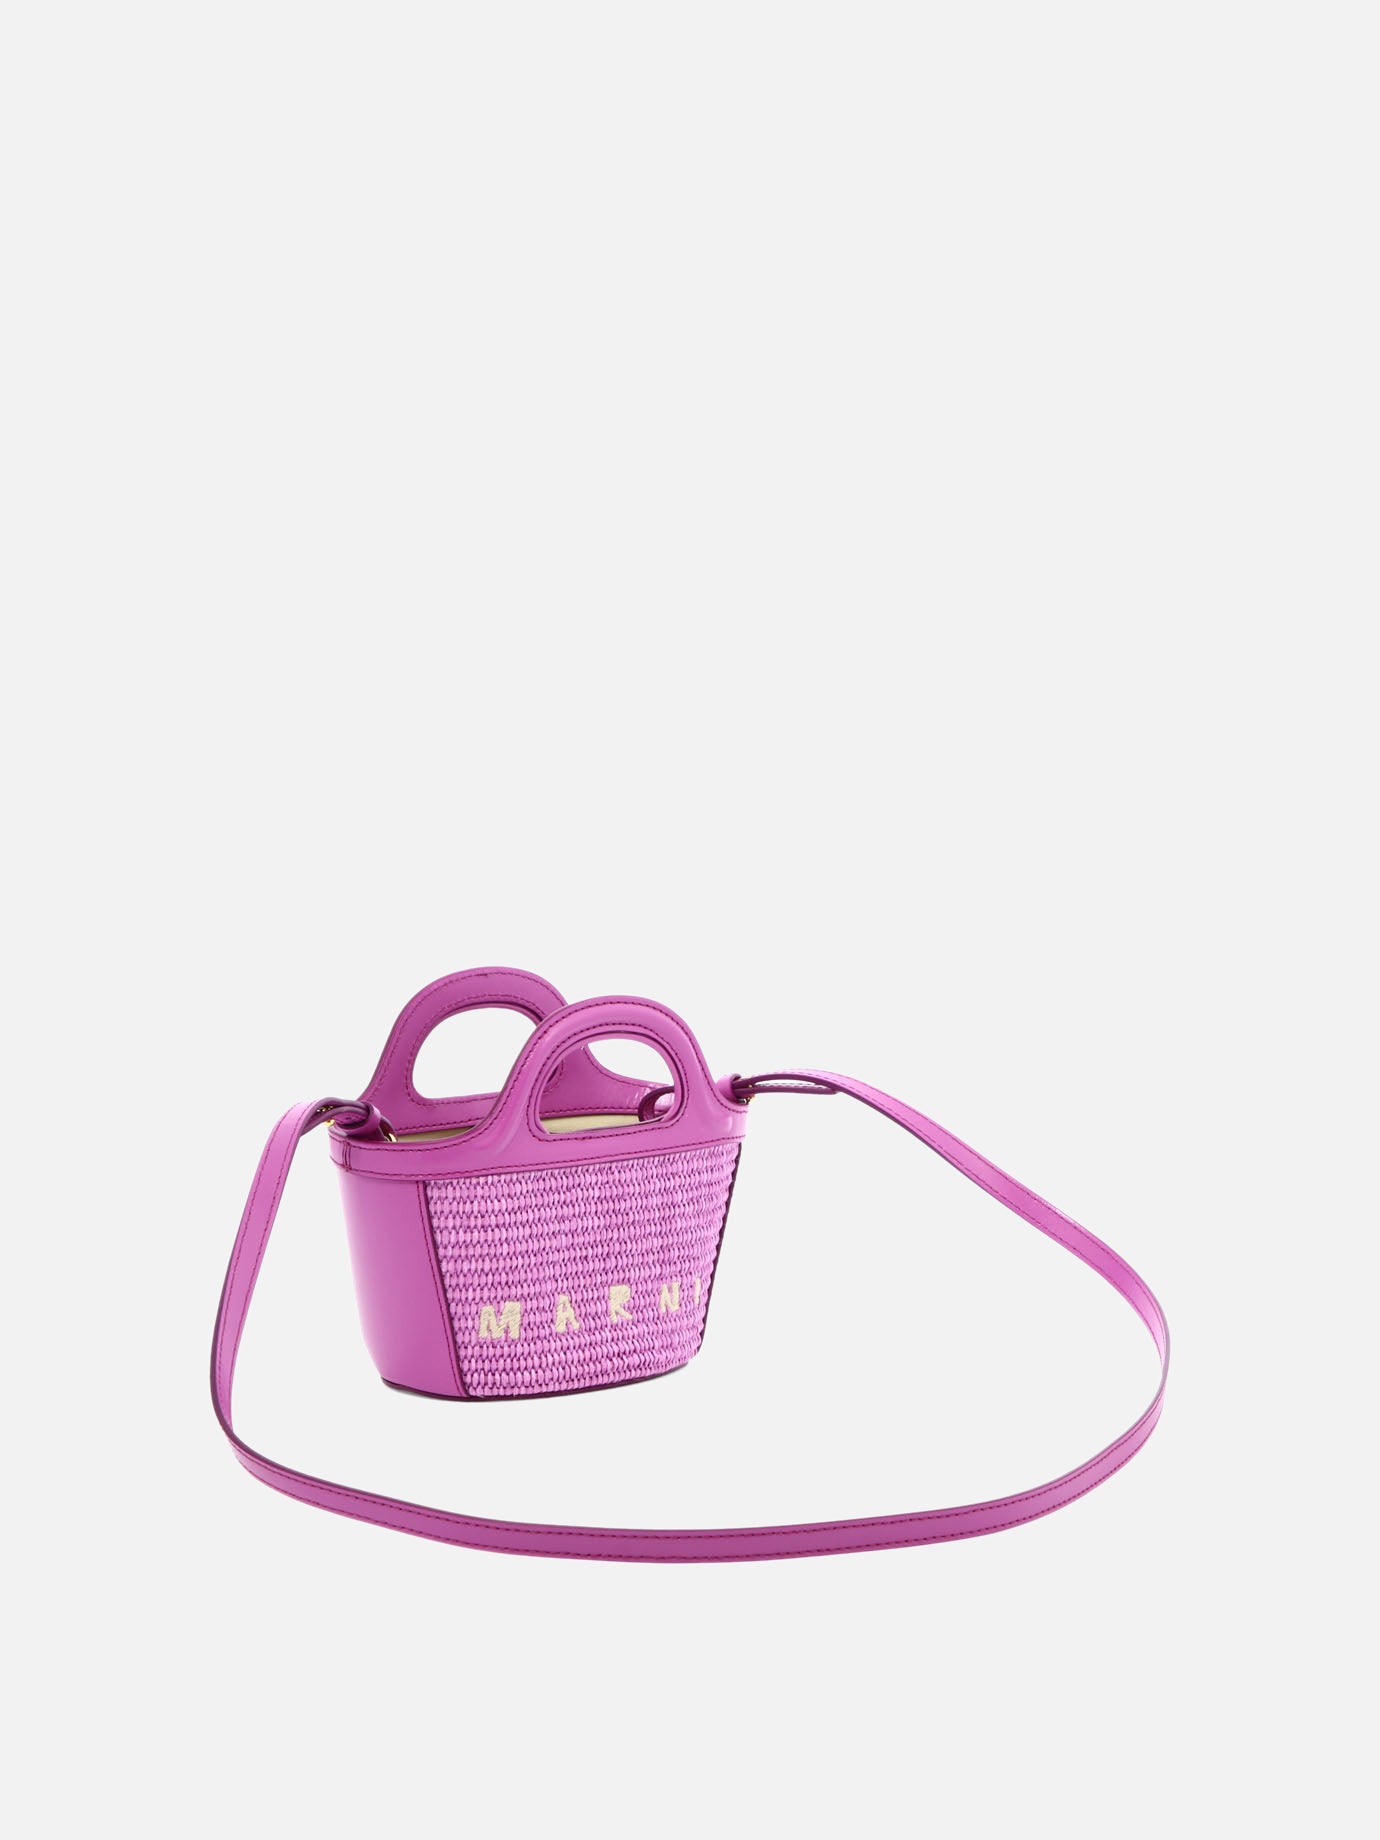 "Tropicalia Micro" handbag